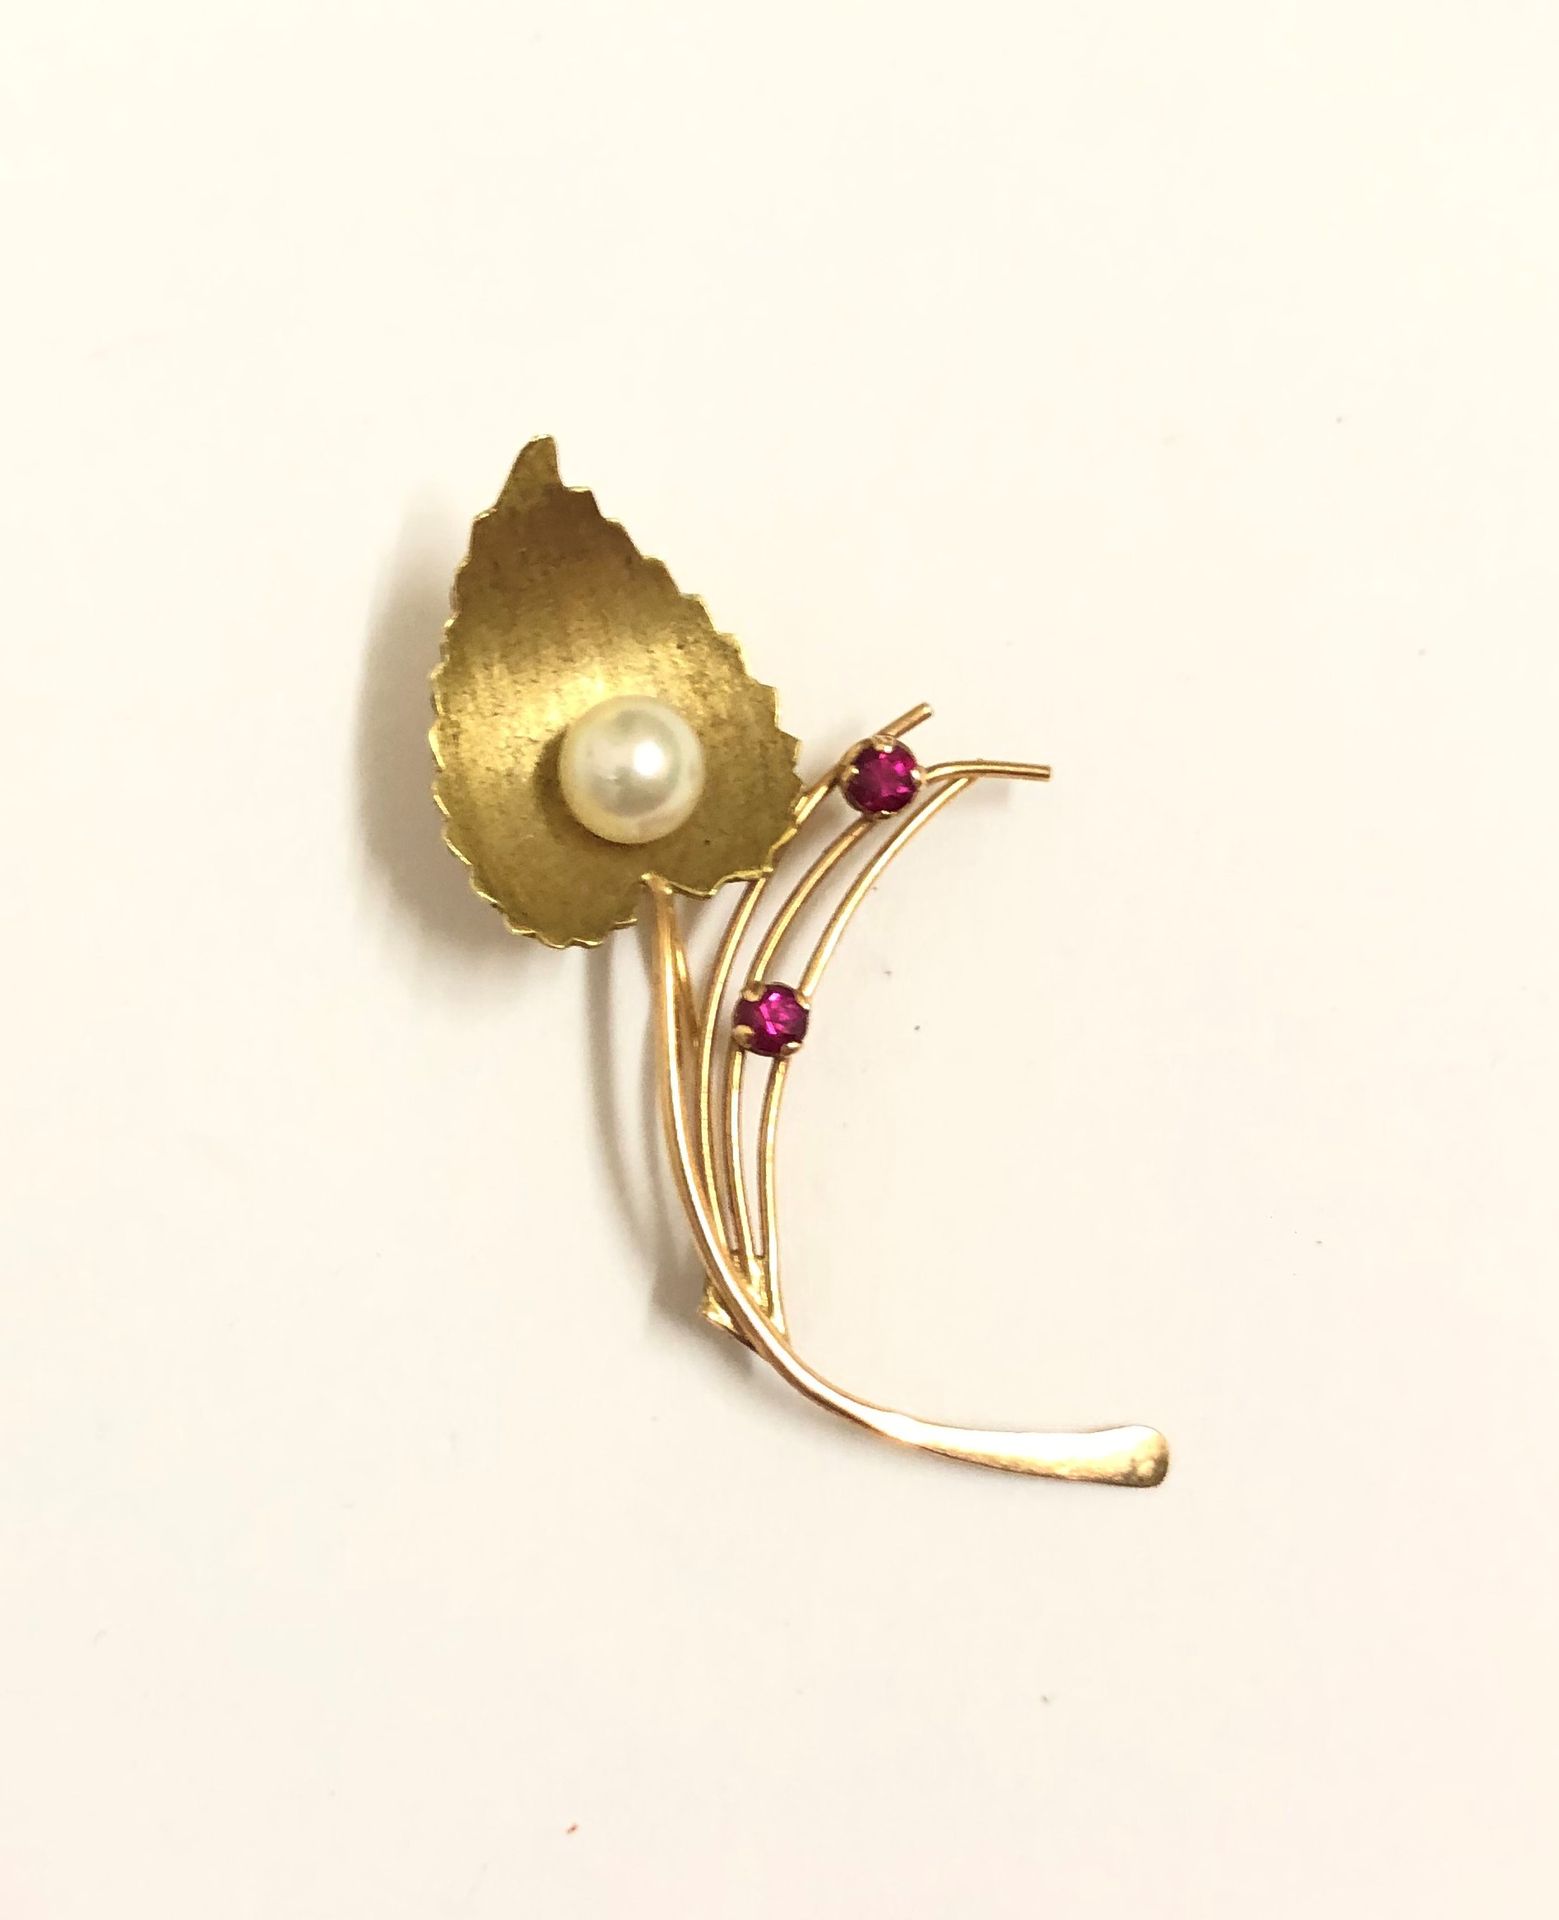 Null 一枚形成花朵的镀金胸针。5厘米。